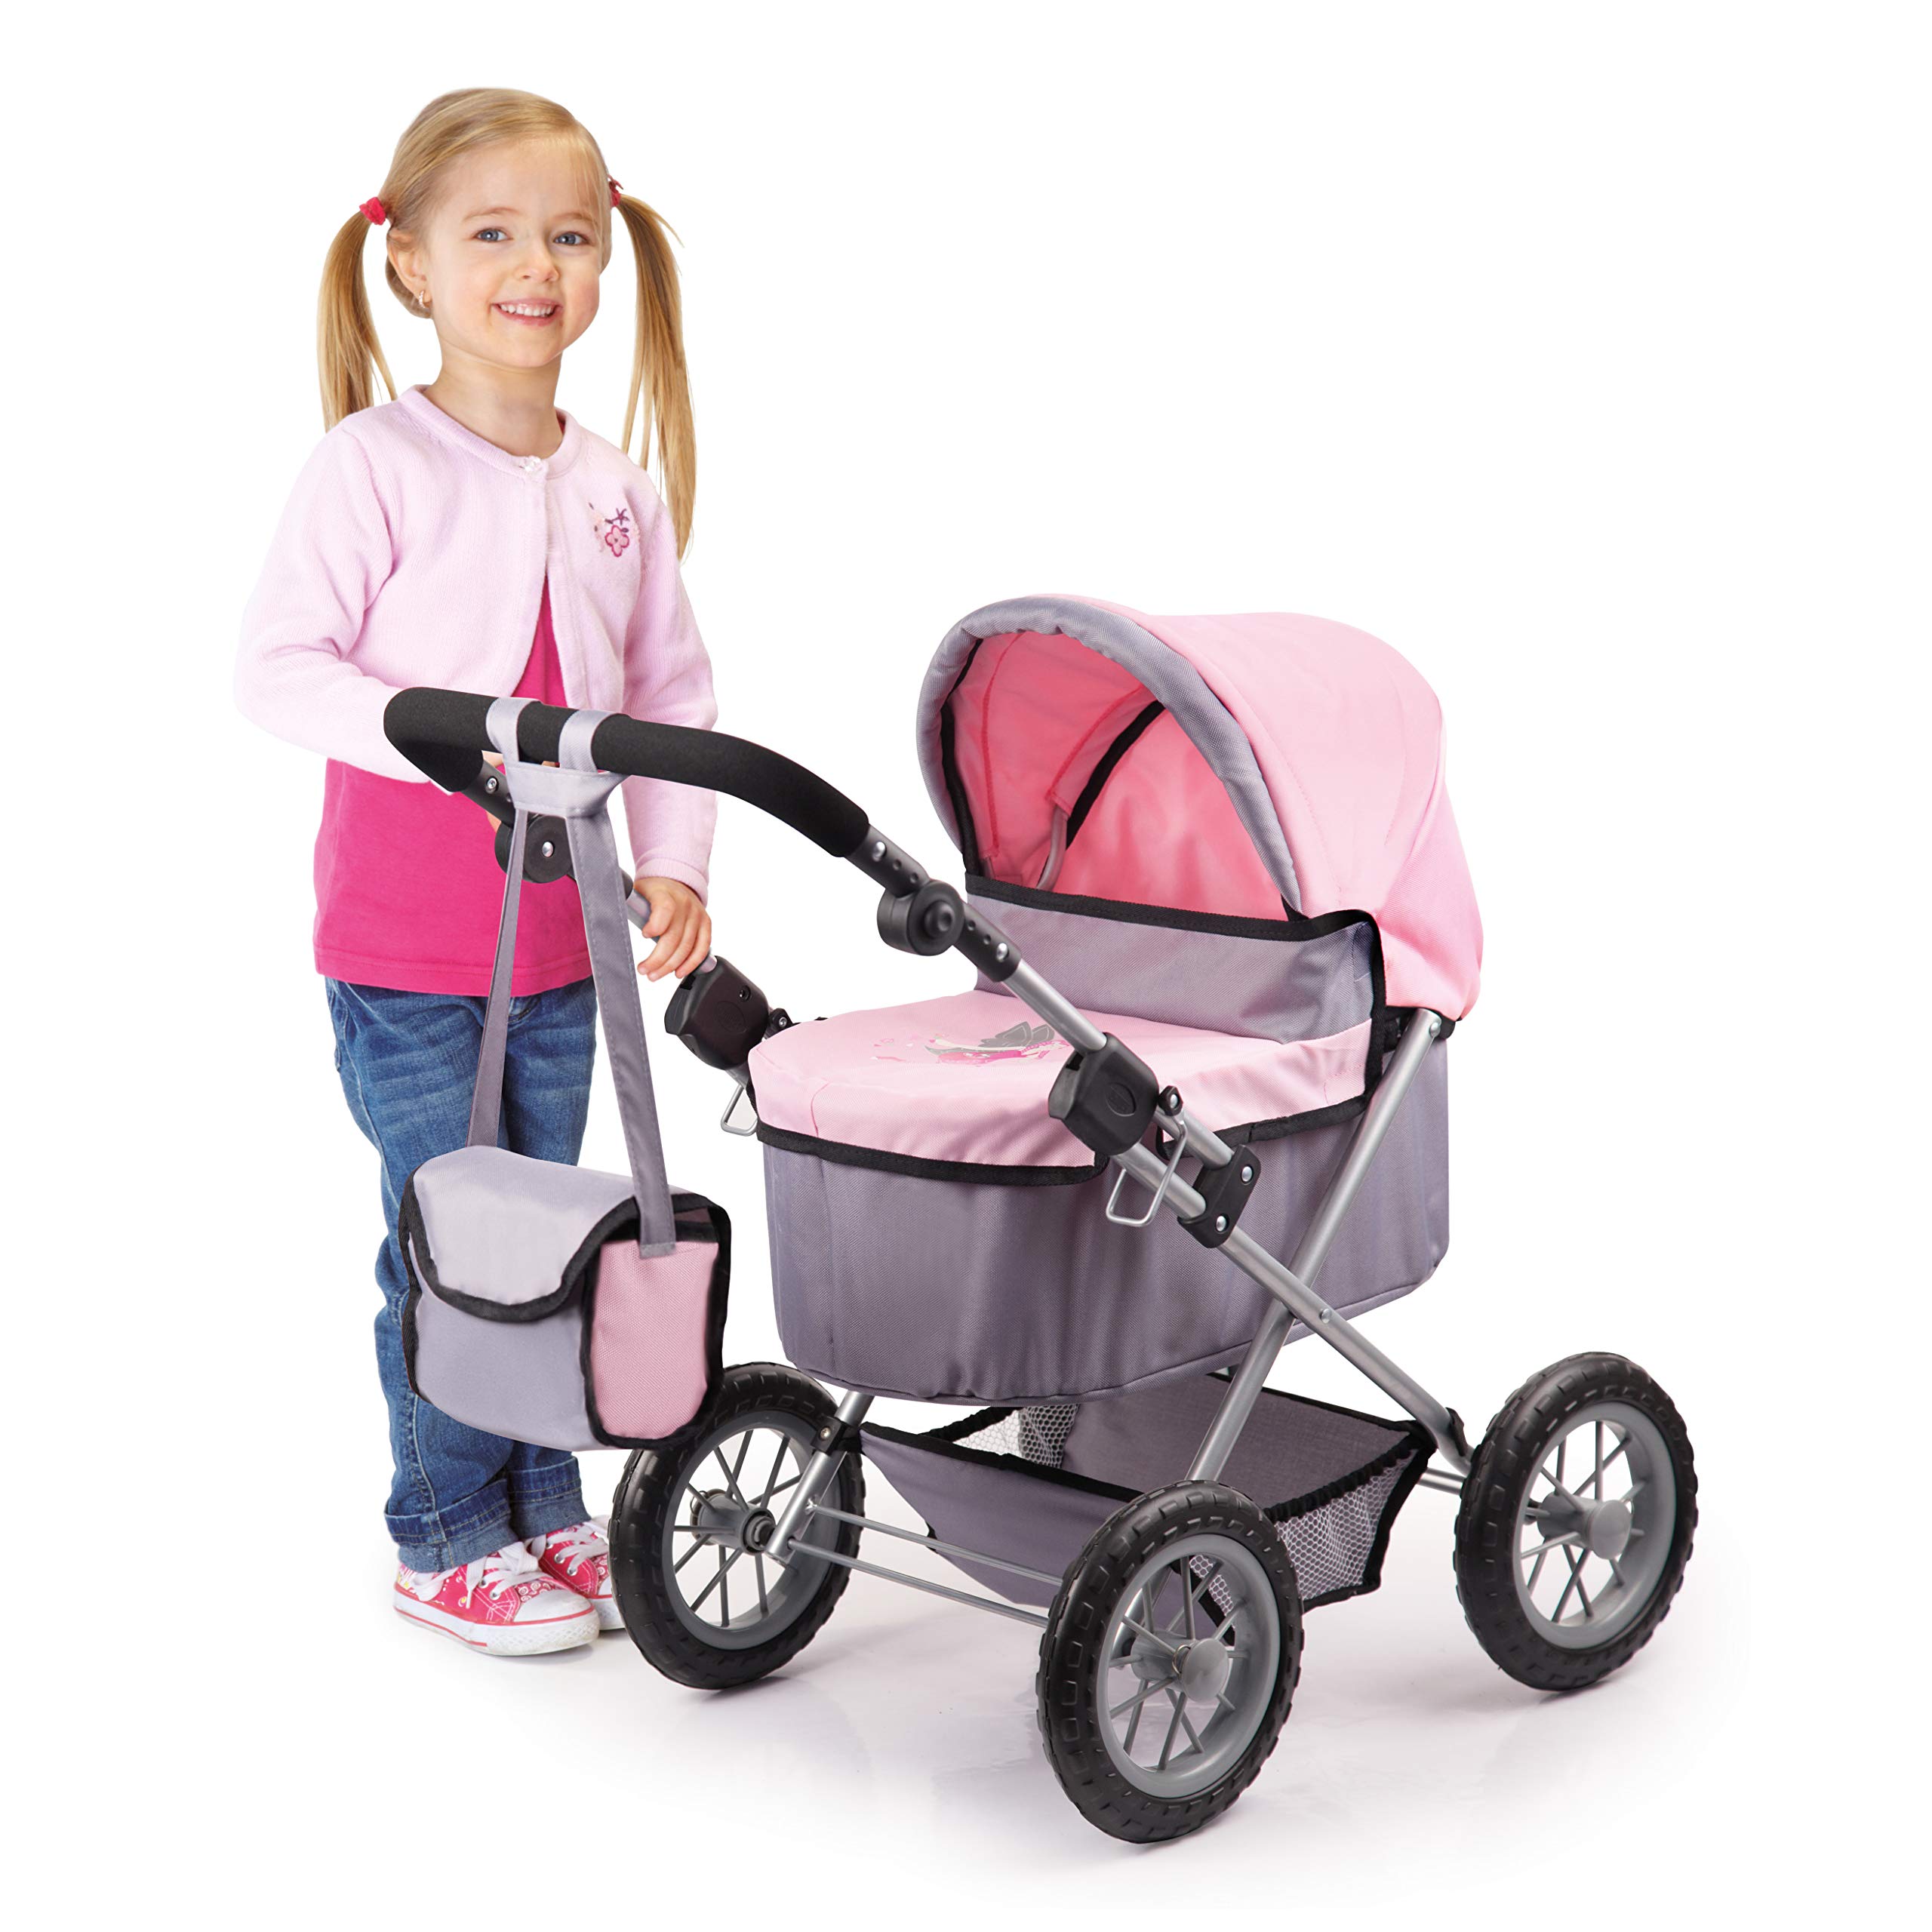 Bayer Design Baby Doll Trendy Pram in Grey/Pink, 67 x 41 x 68 centimeters